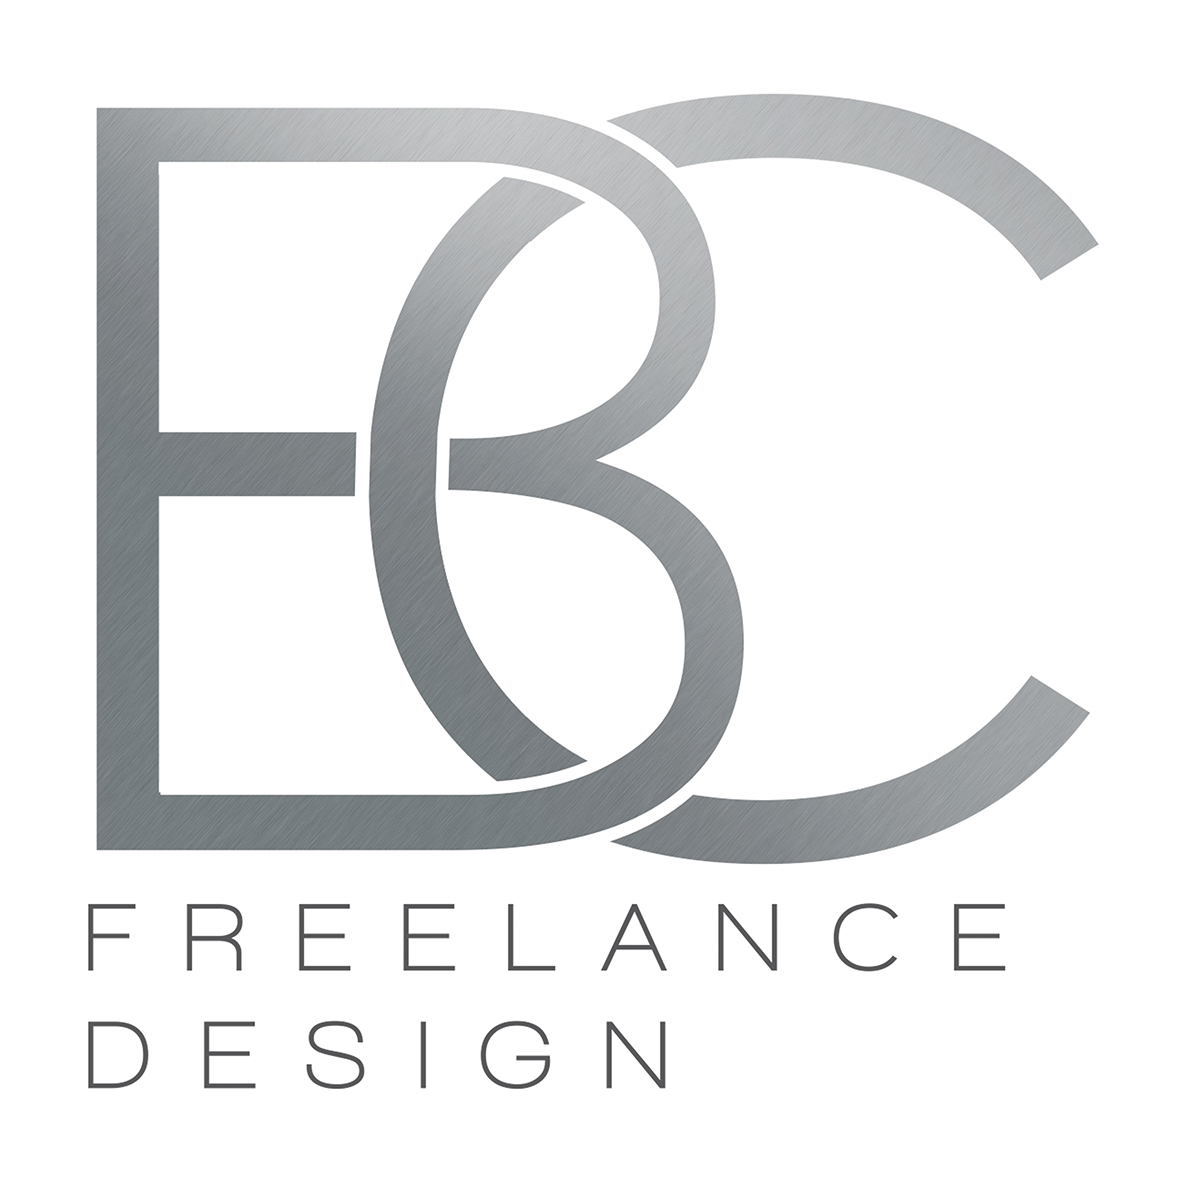 BC freelance design - Accommodation Airlie Beach